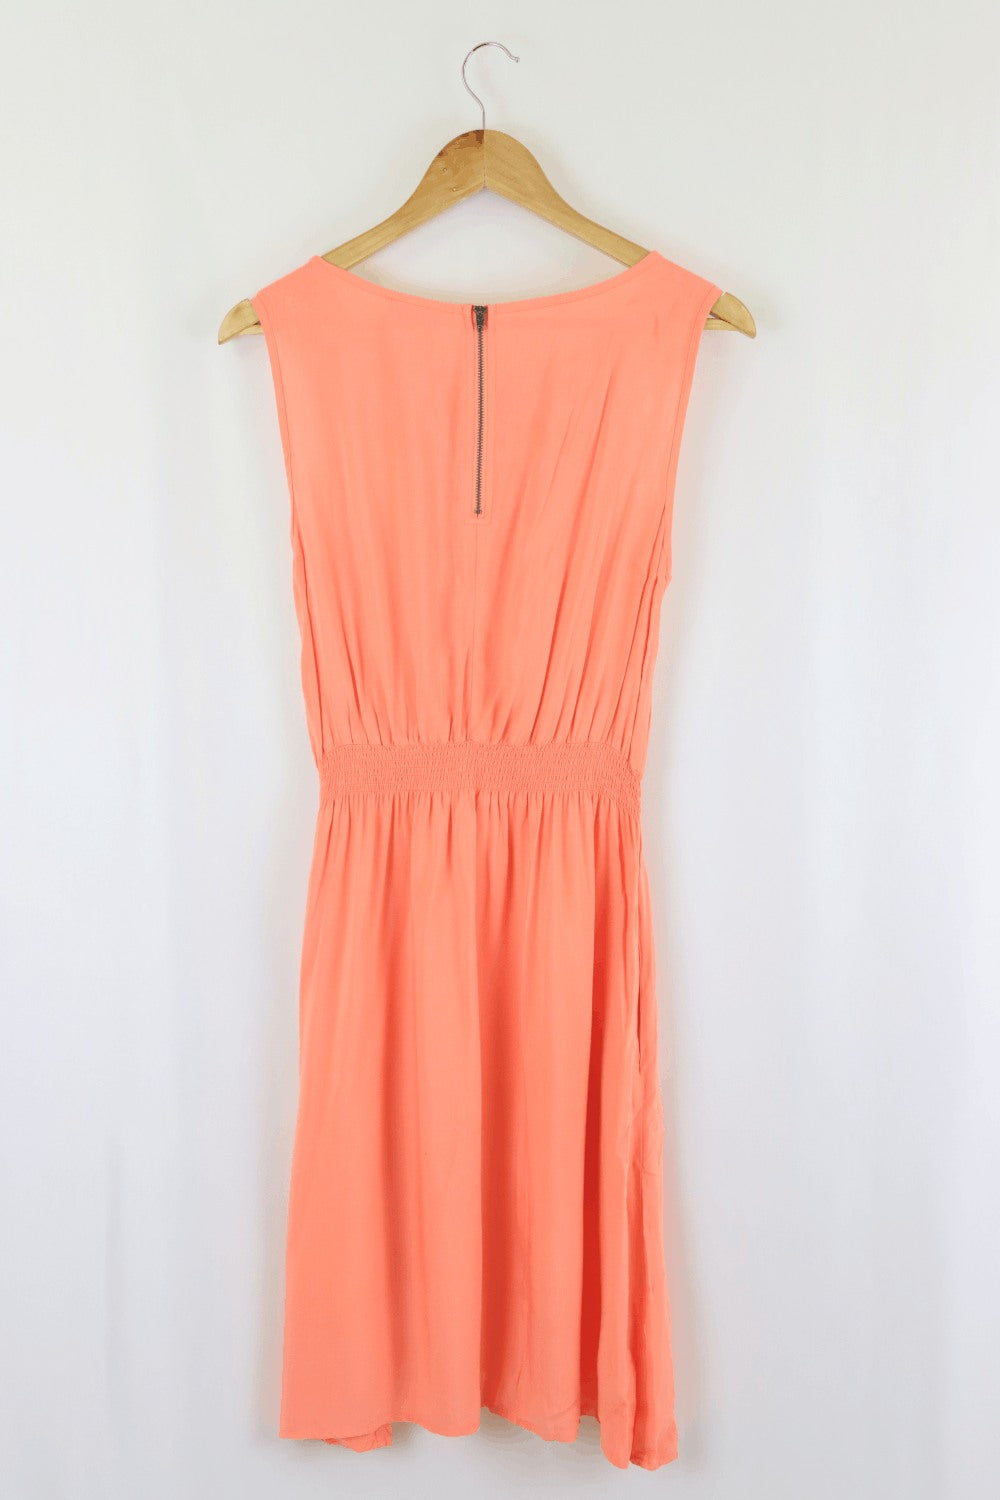 Jeanswest Orange Dress 10